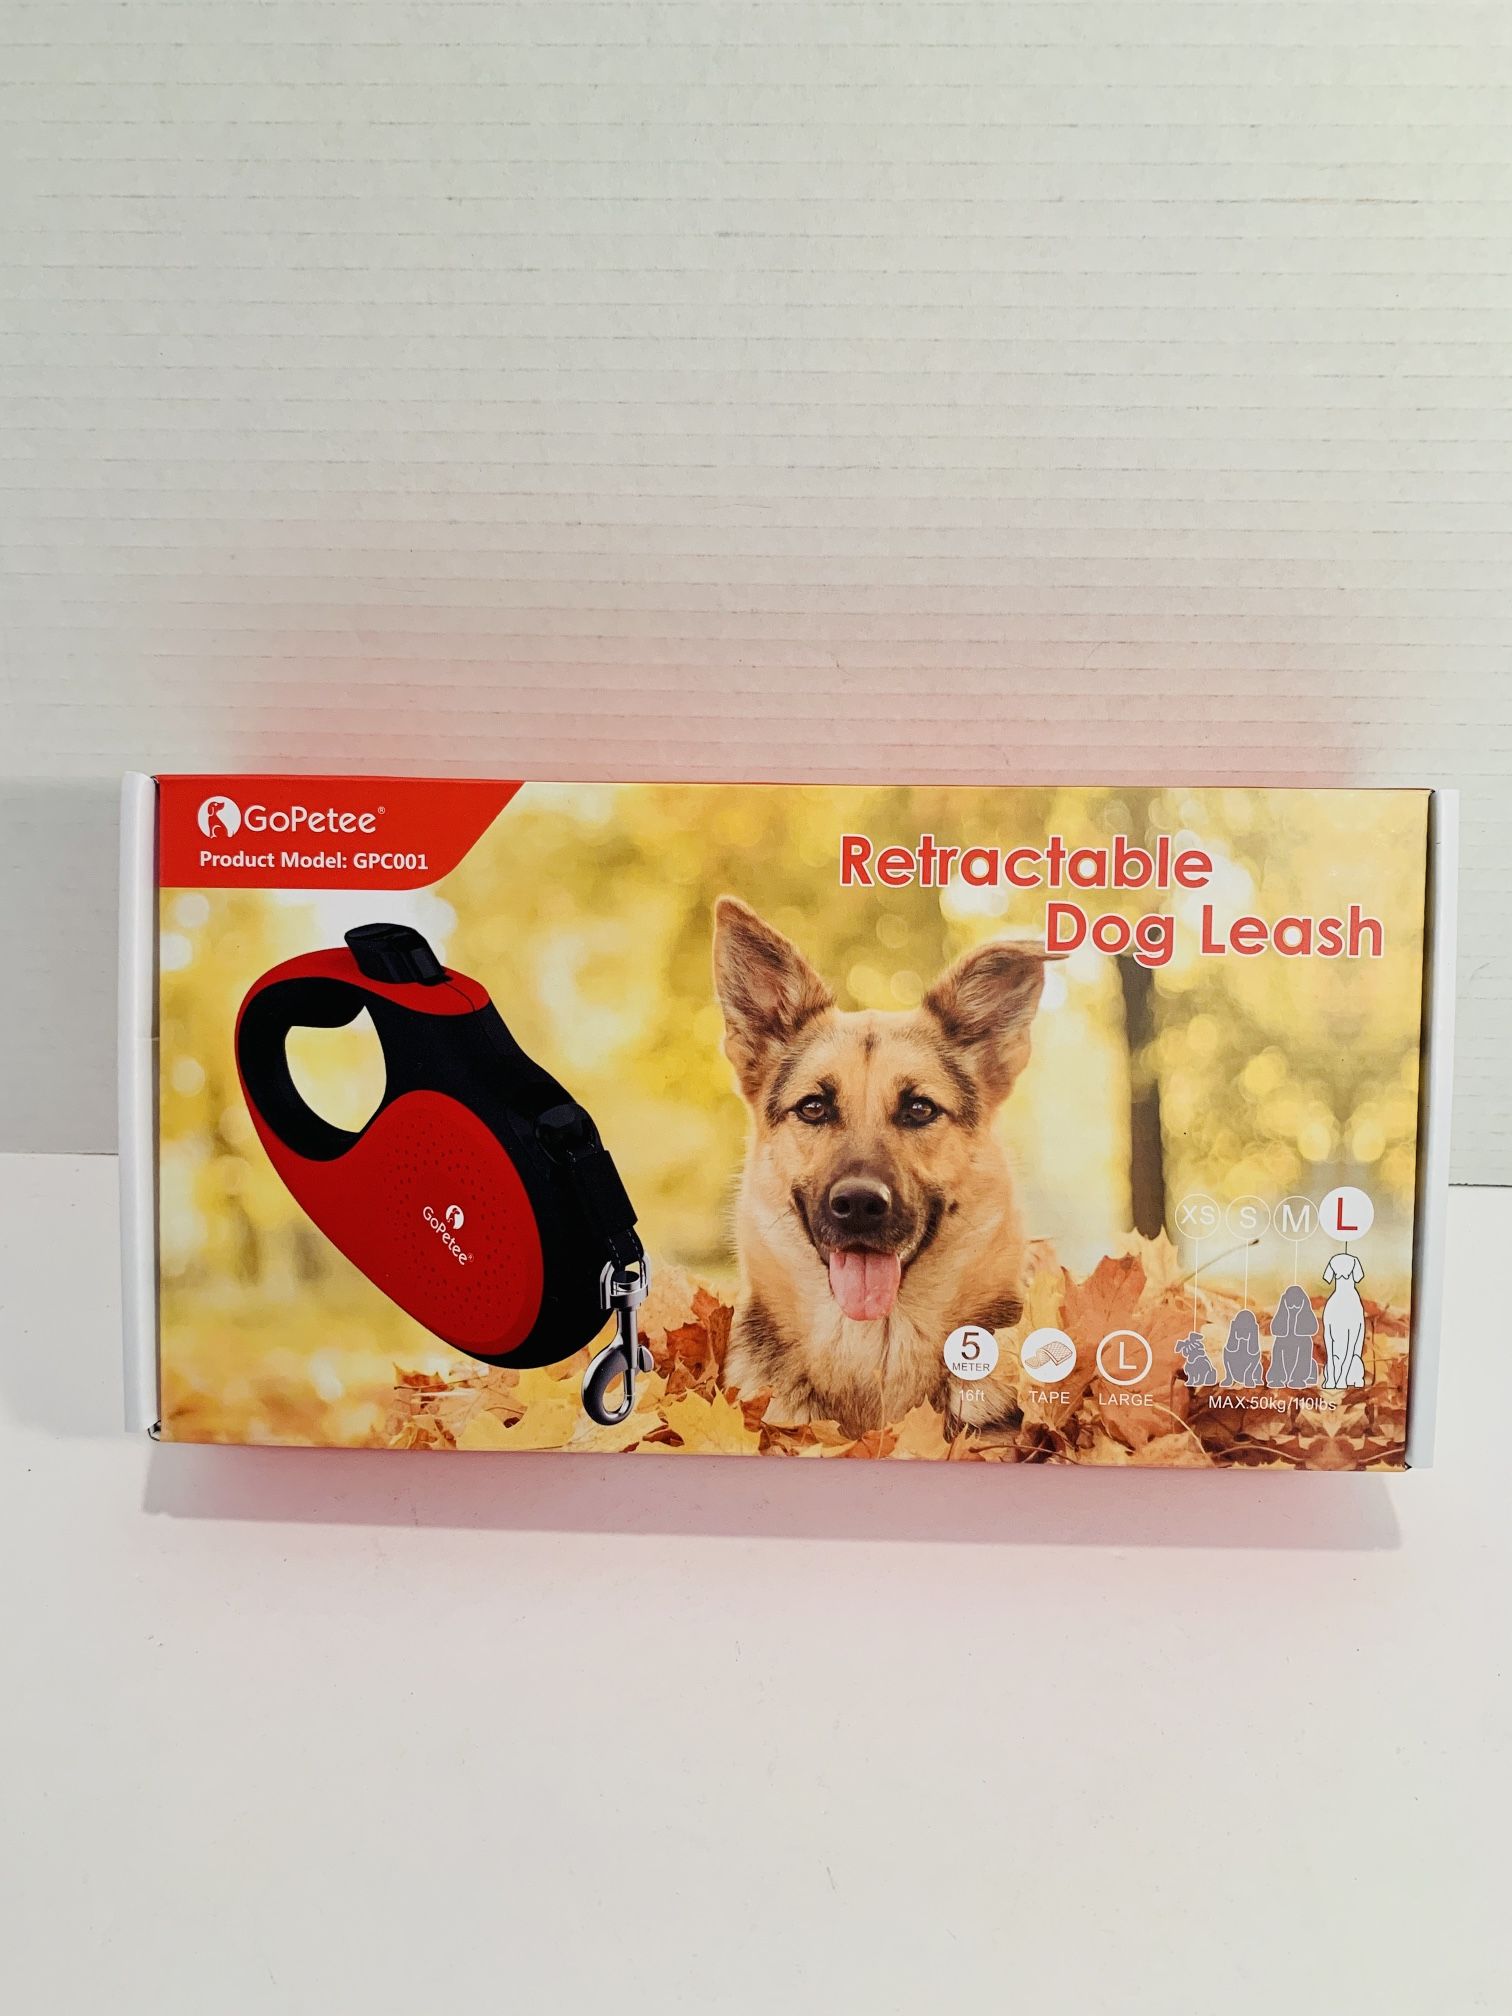 Brand new GoPetee Retractable Dog Leash